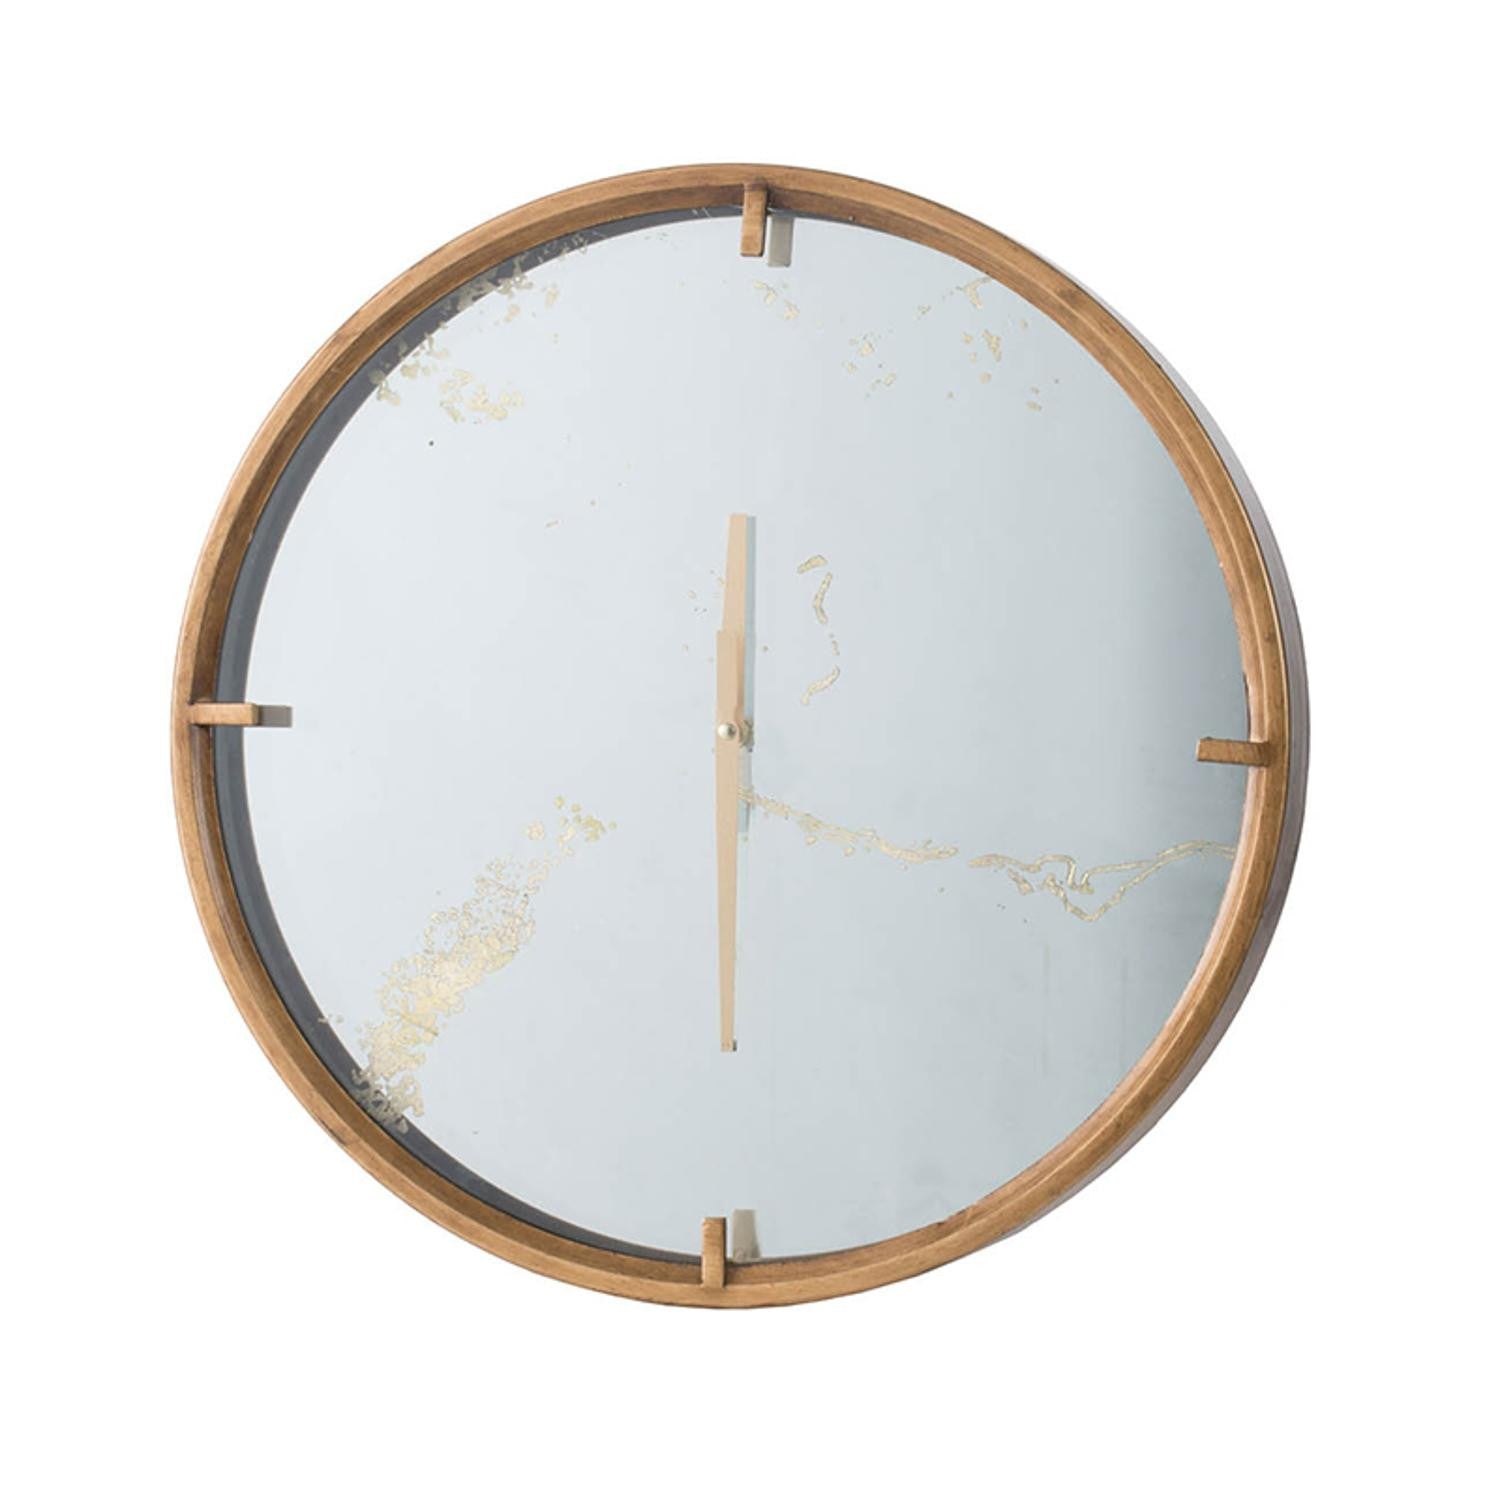 2" Round Gold Wood Analog Wall Clock